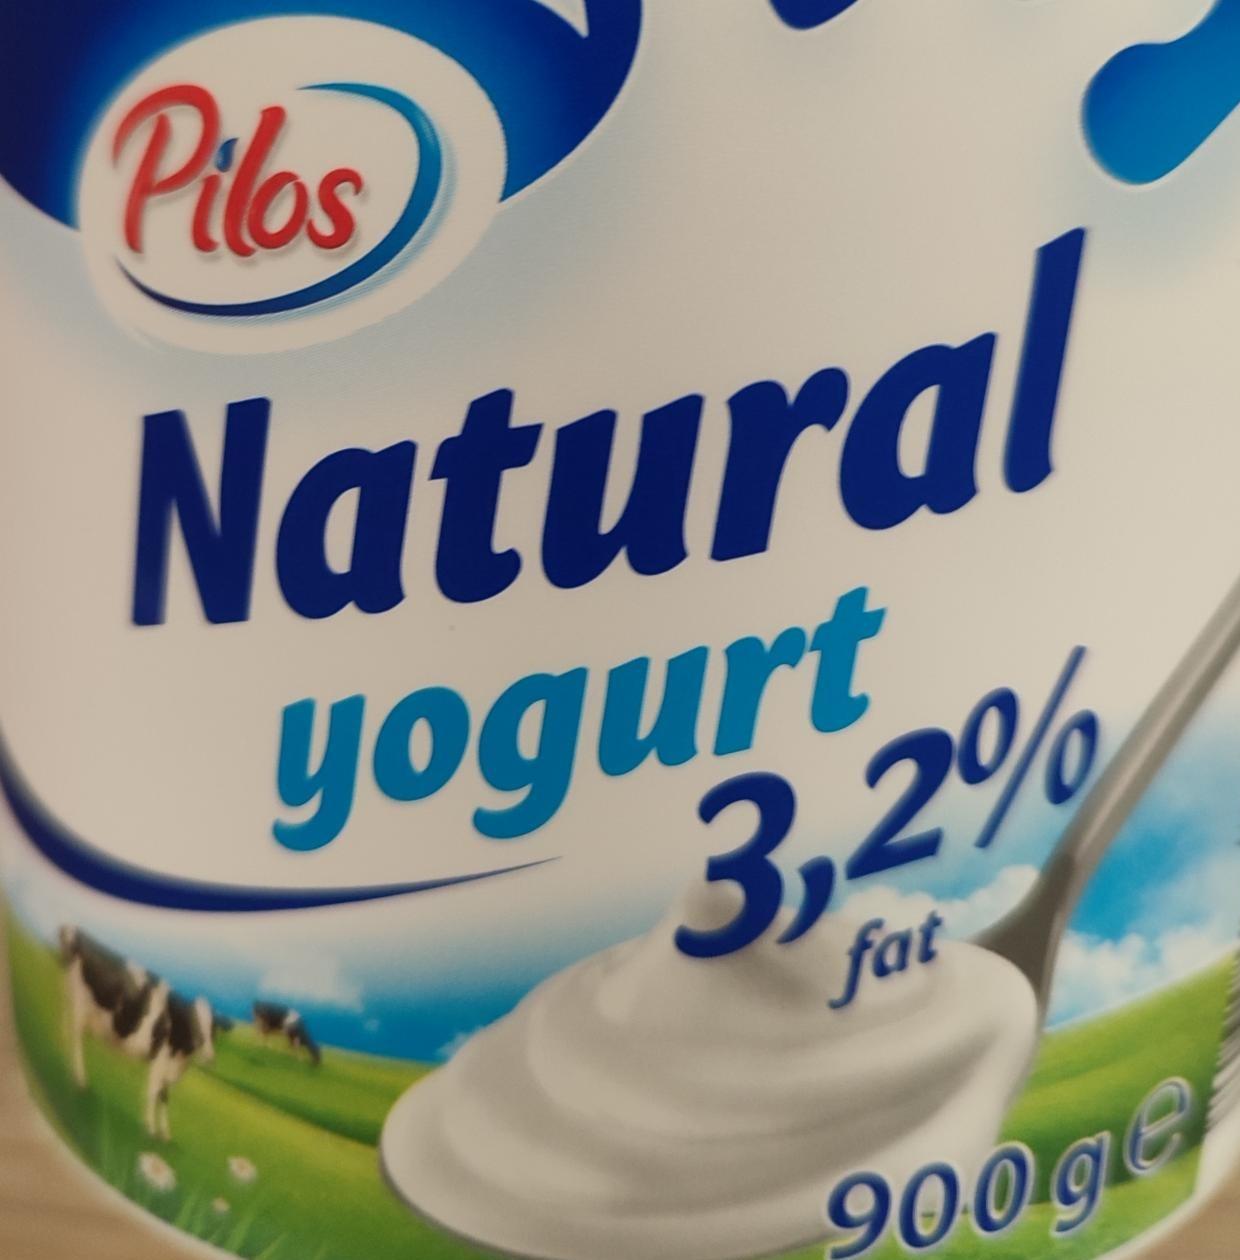 Фото - Натуральний йогурт Natural yogurt 3.2% жиру Pilos